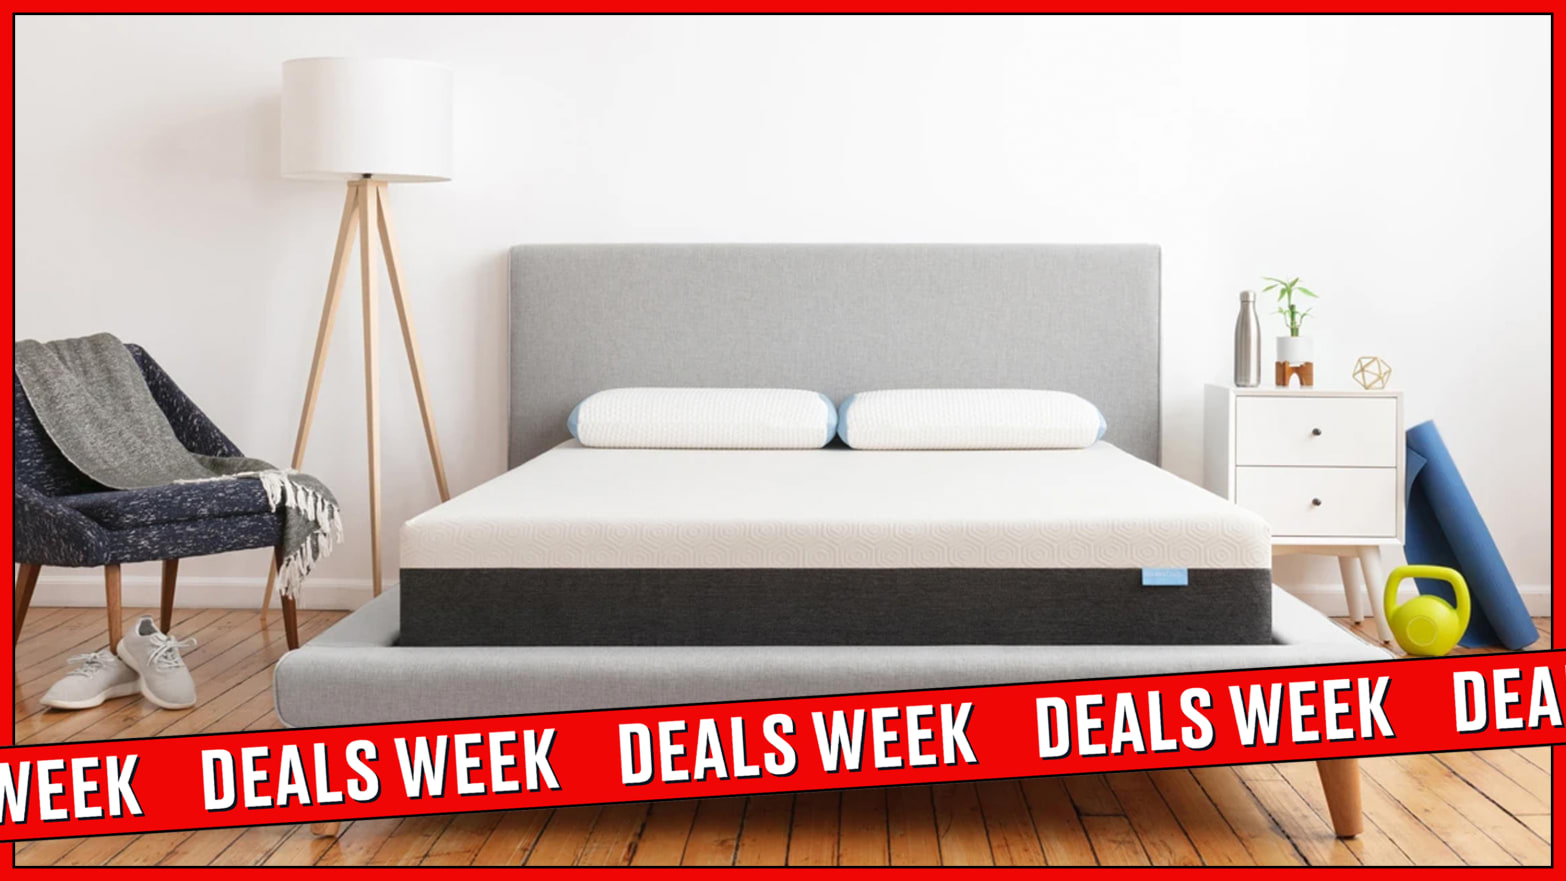 doorbuster full mattress deals